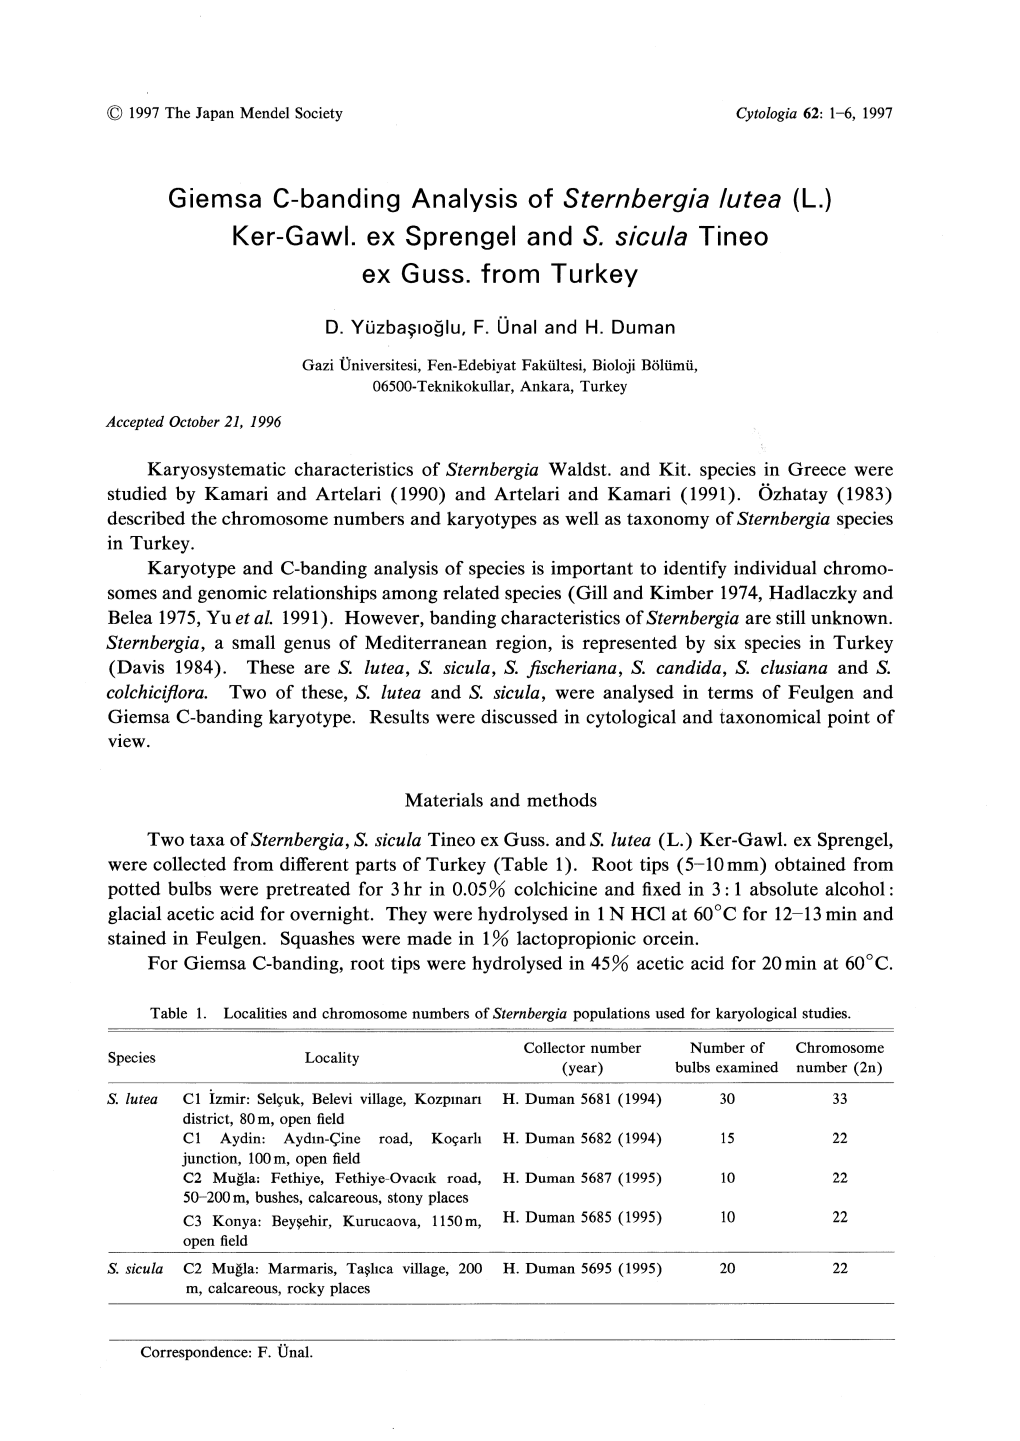 Giemsa C-Banding Analysis of Sternbergia Lutea (L.) Ker-Gawl